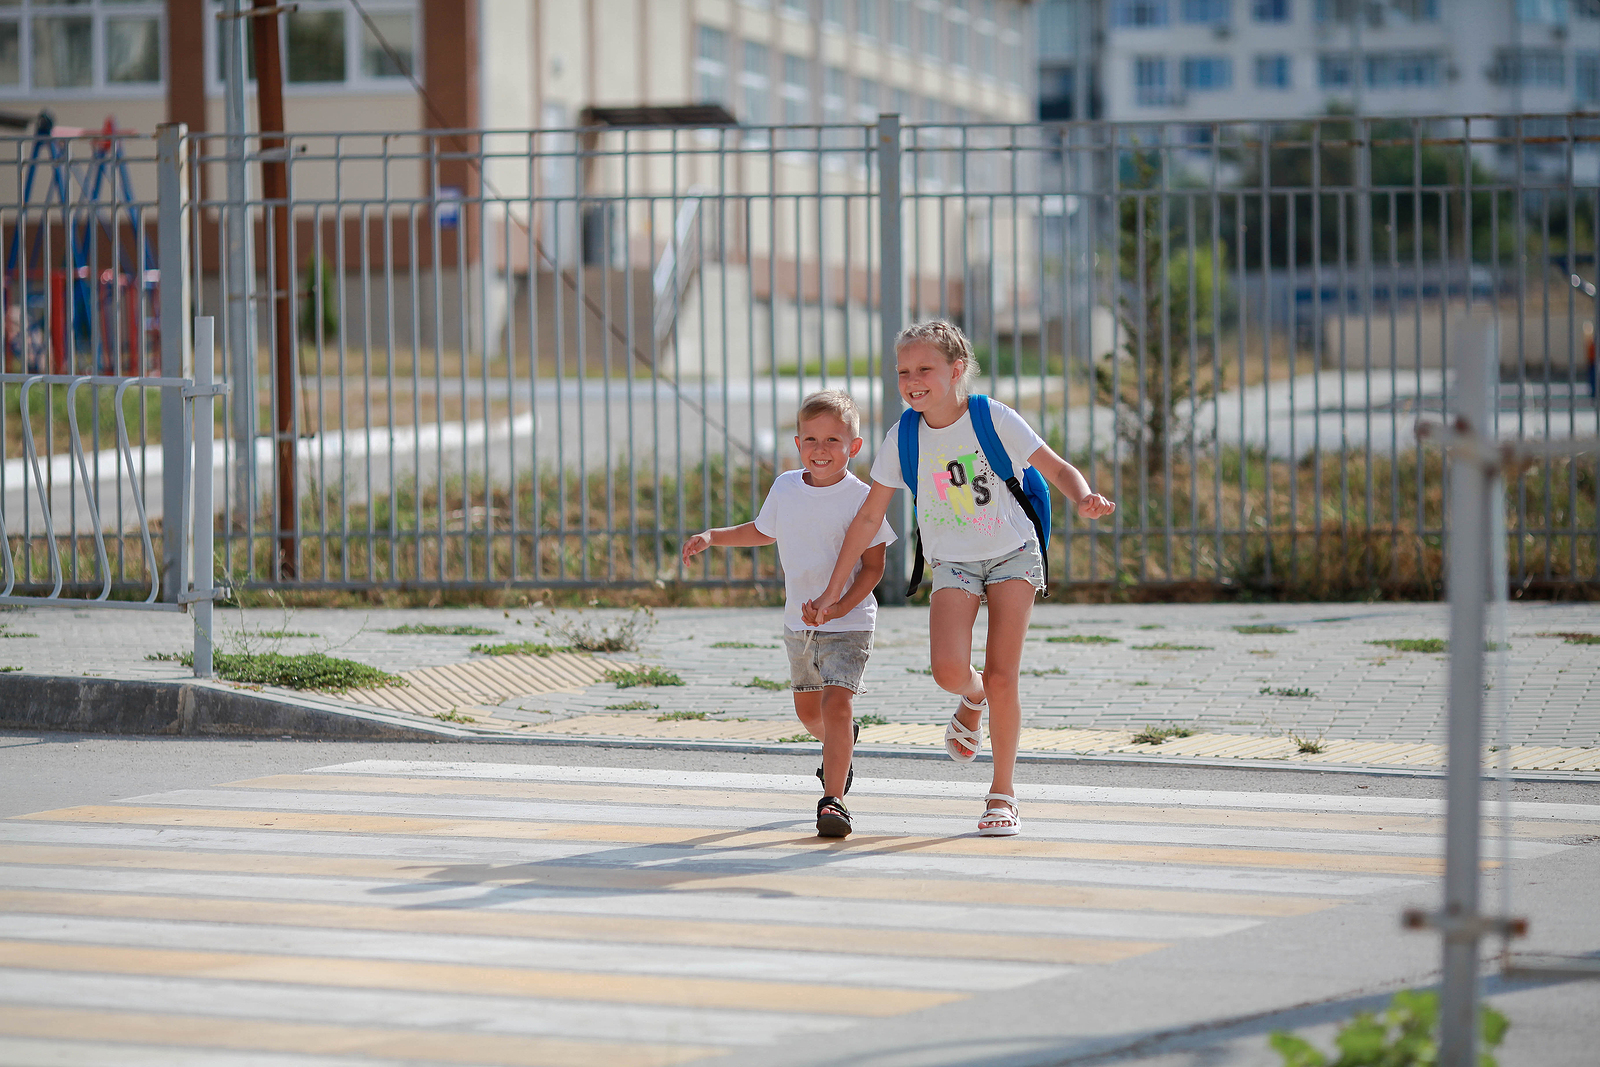 two children run across a road